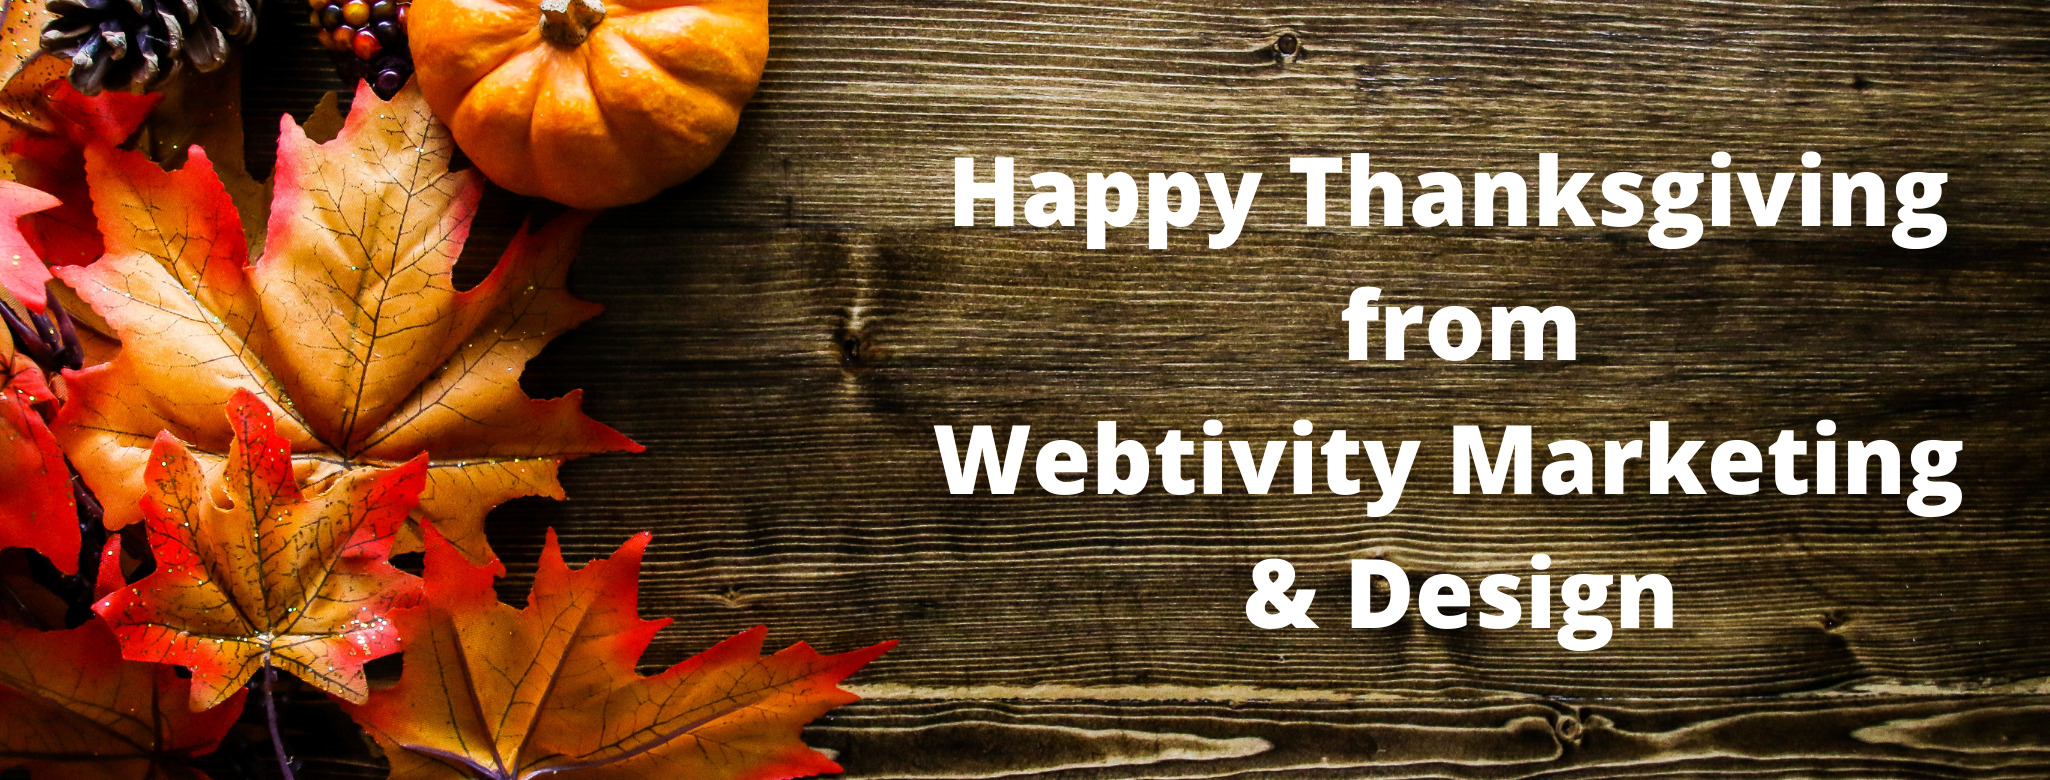 Happy Thanksgiving from Webtivity Marketing